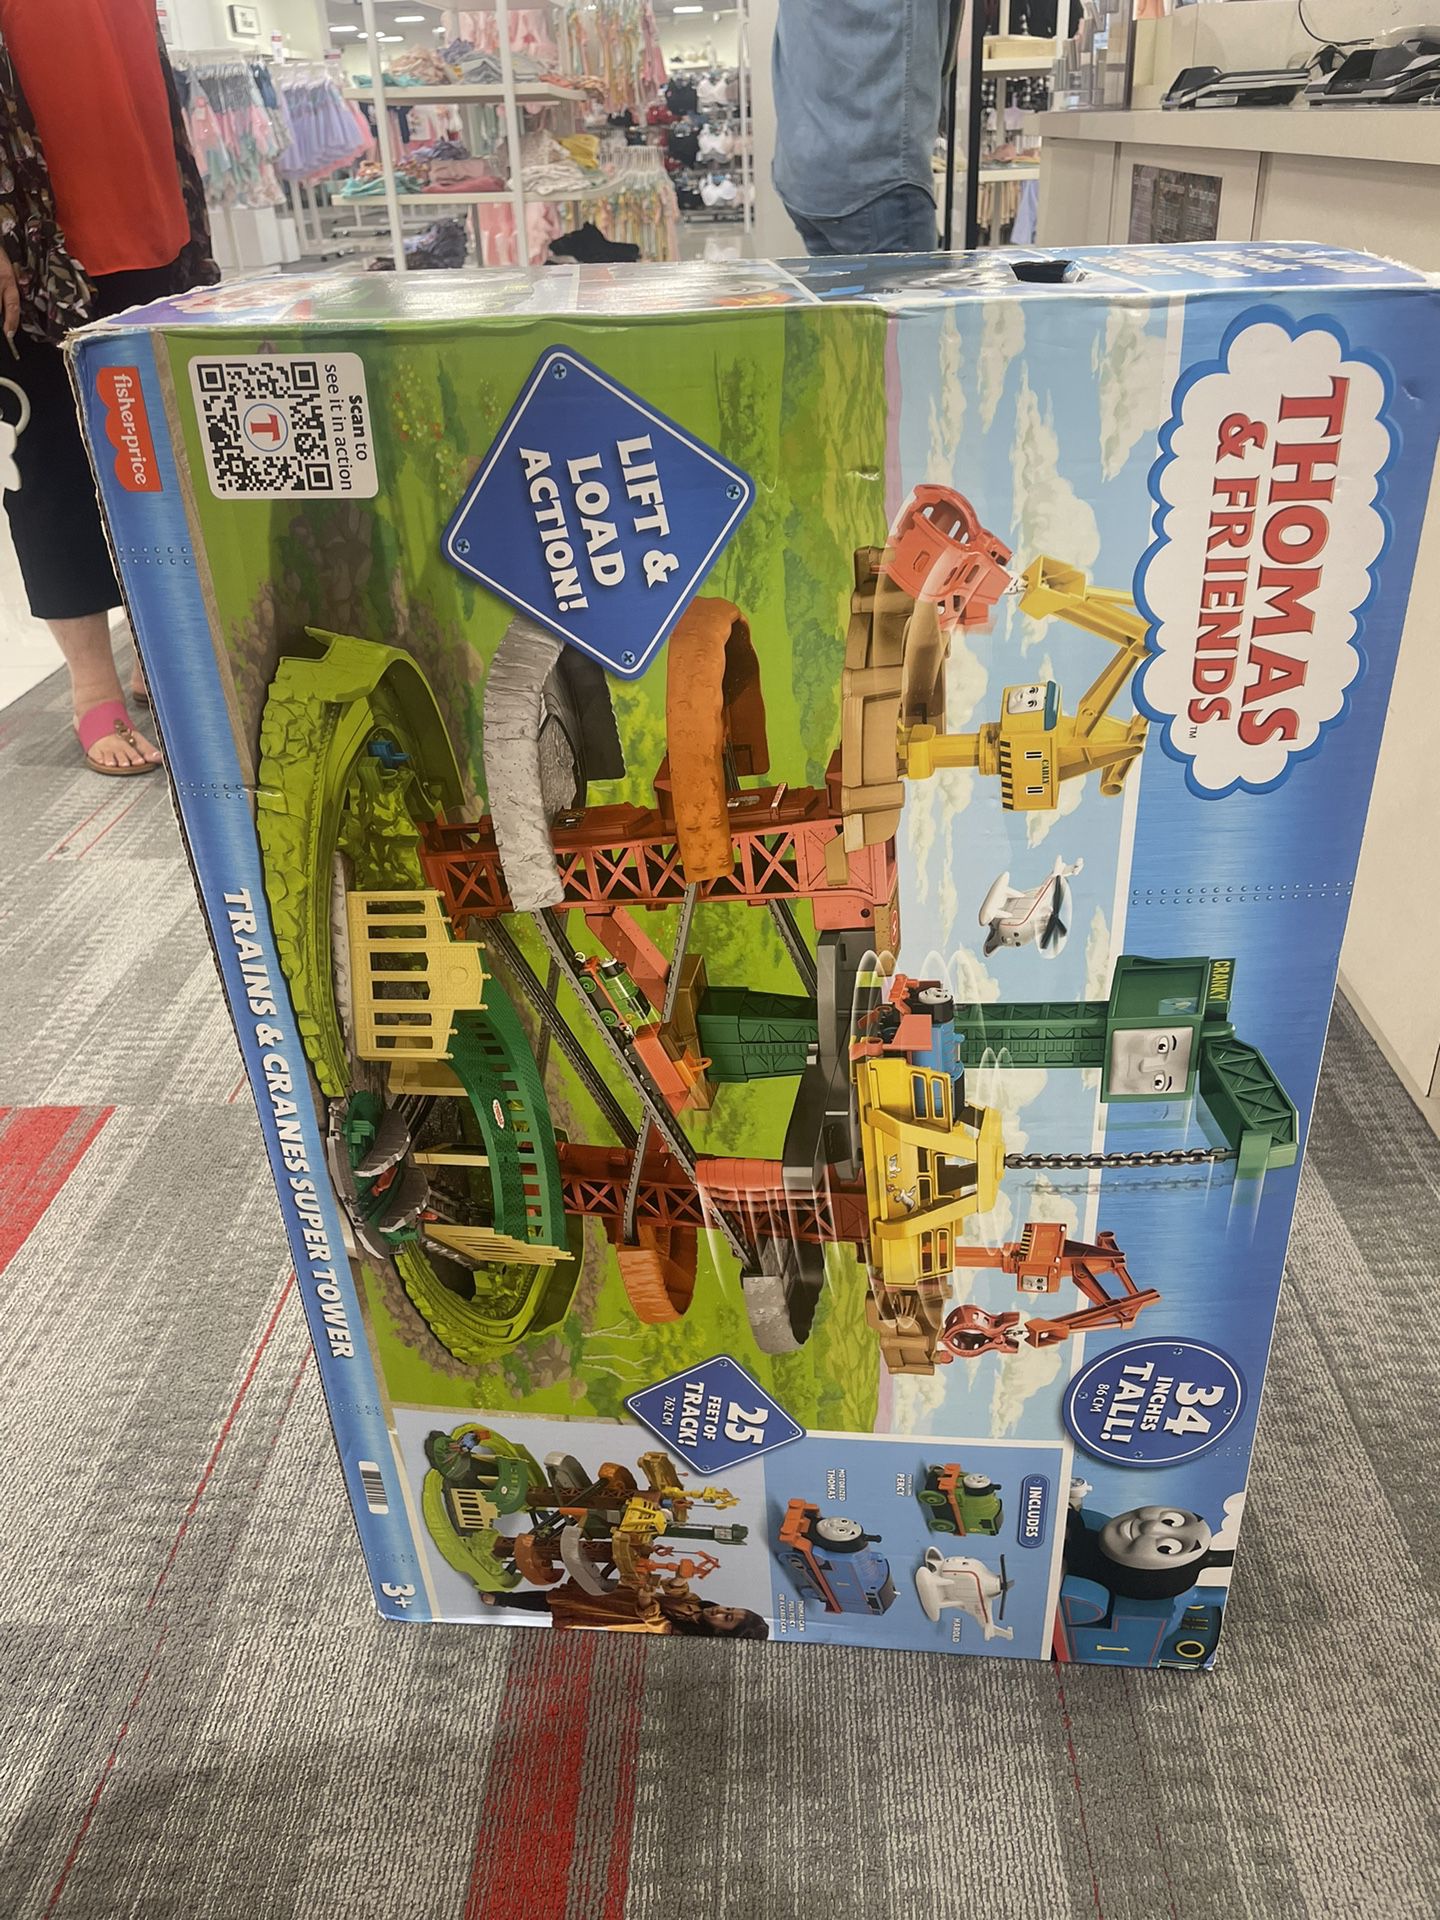 Thomas & Friends Train & Crane Super Tower Toy Set